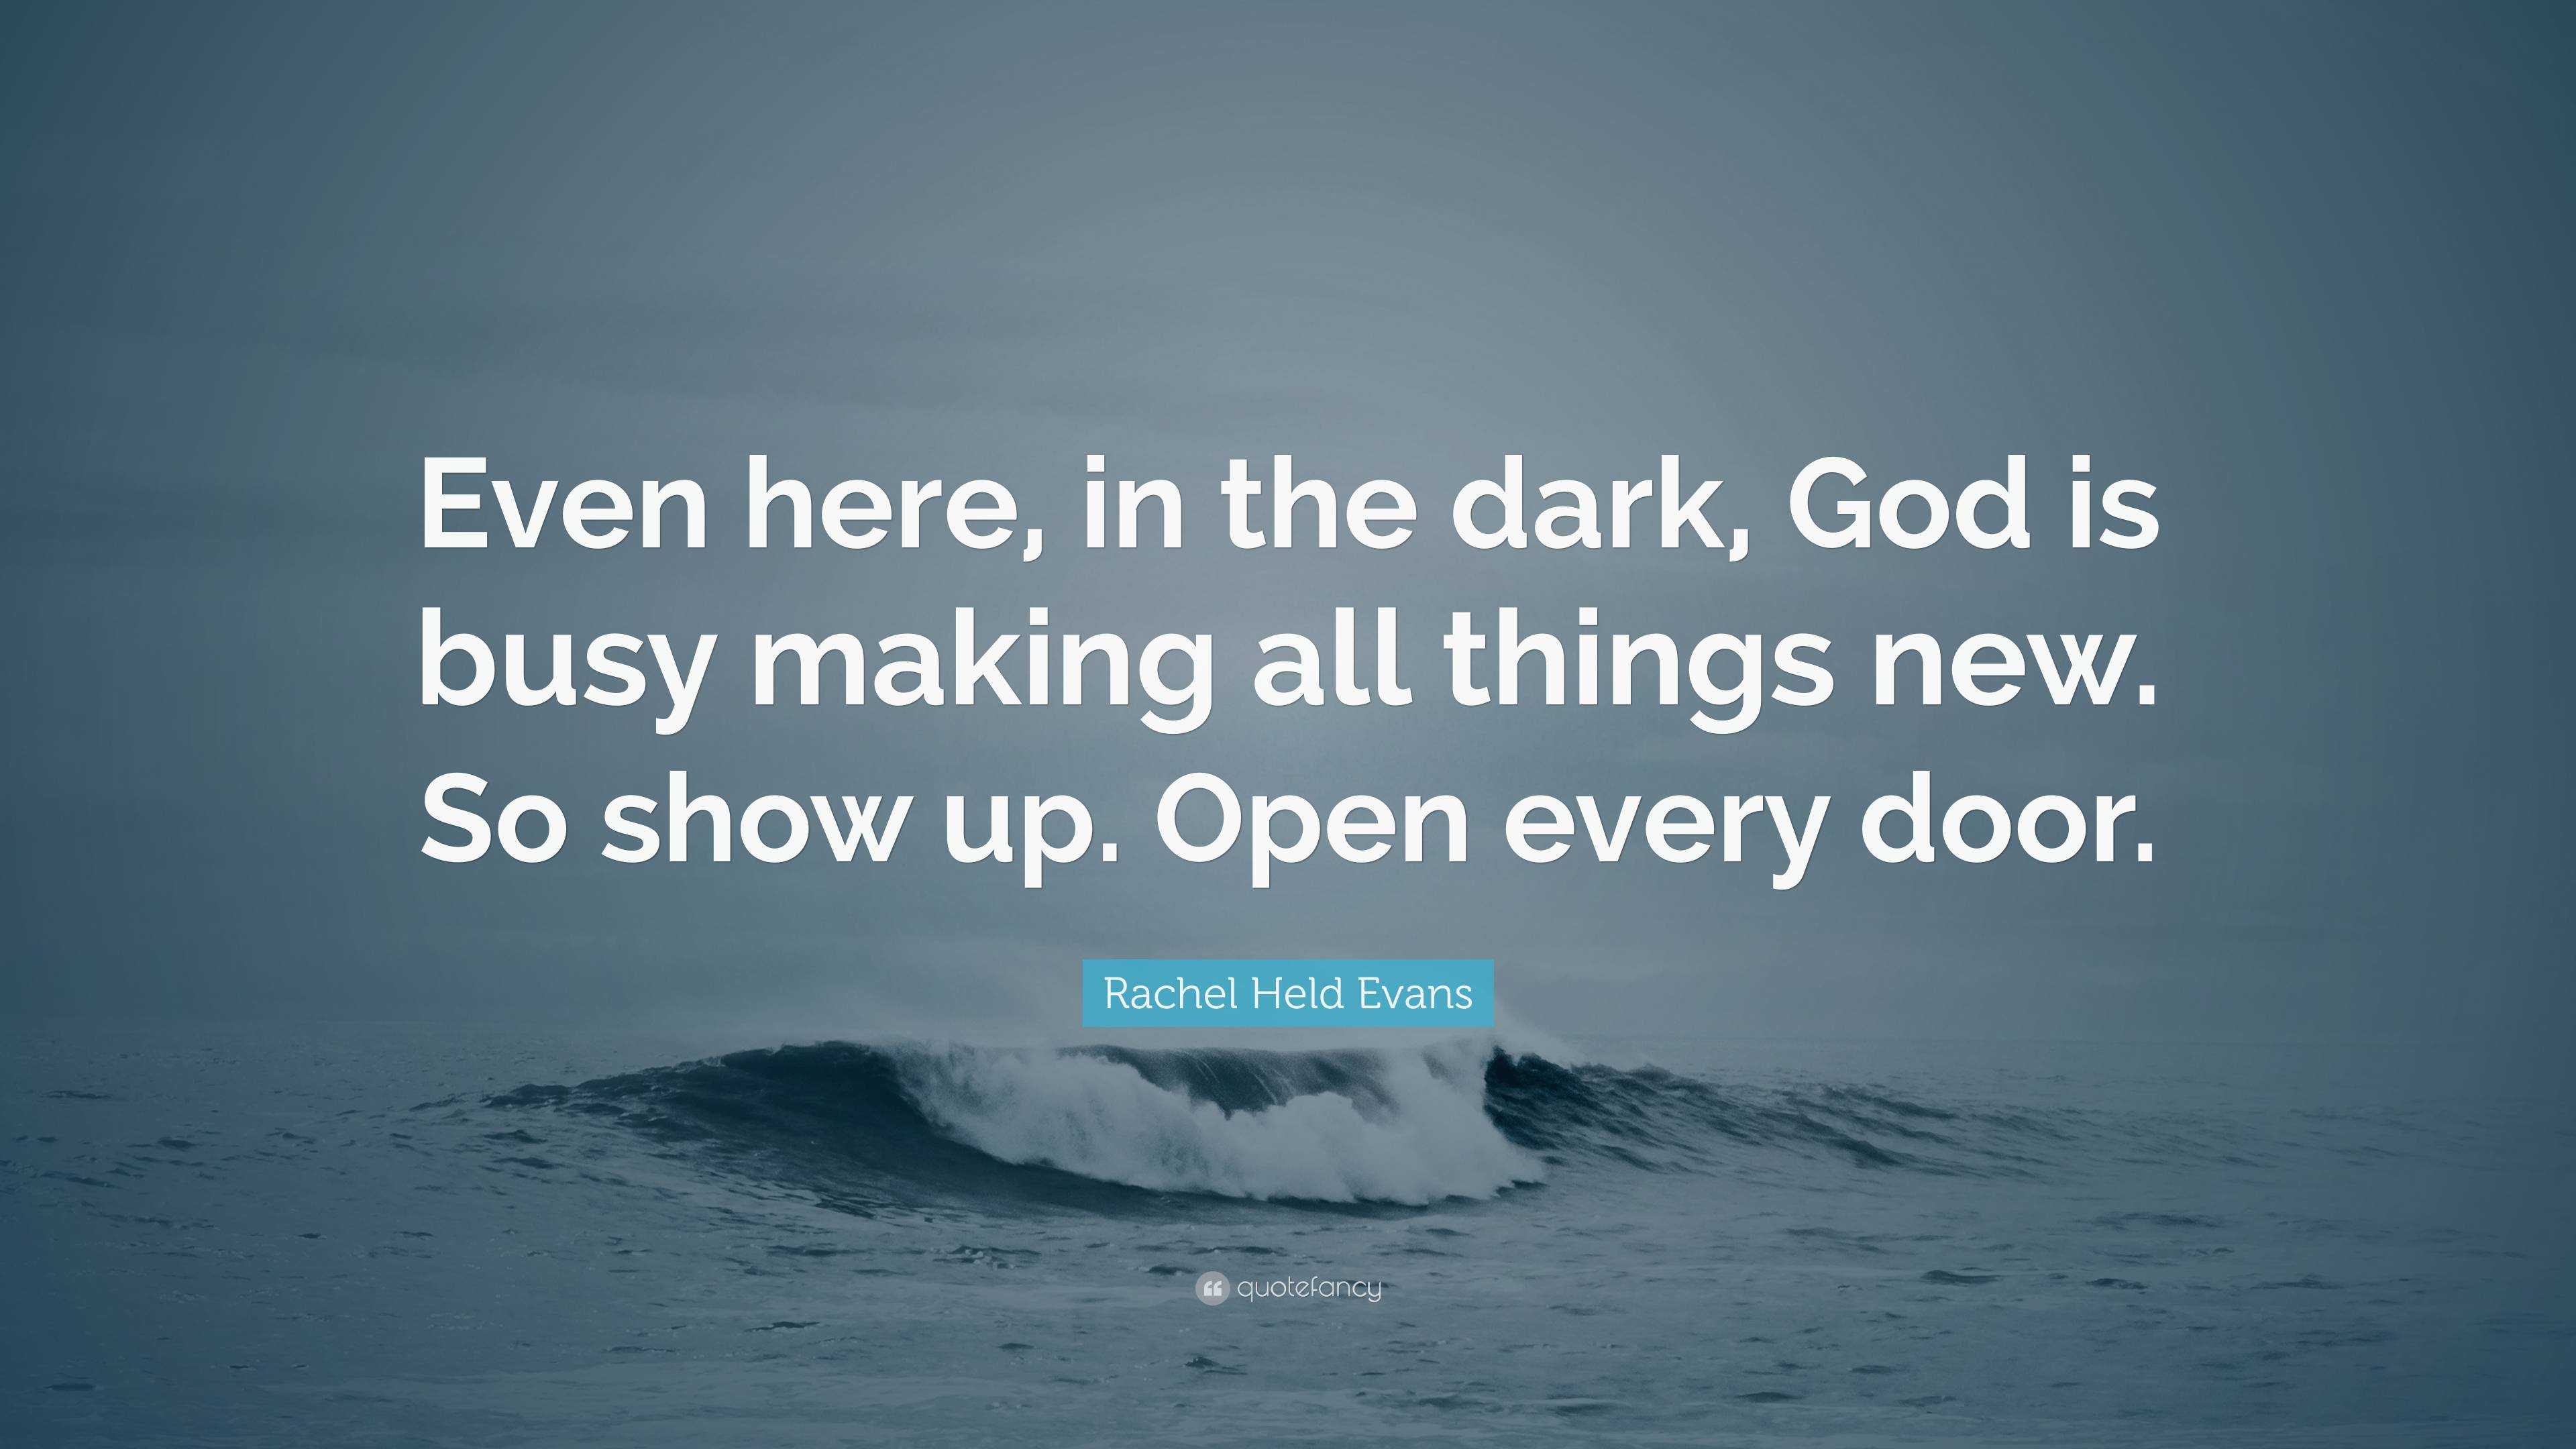 Rachel Held Evans Quote: “Even here, in the dark, God is busy making ...